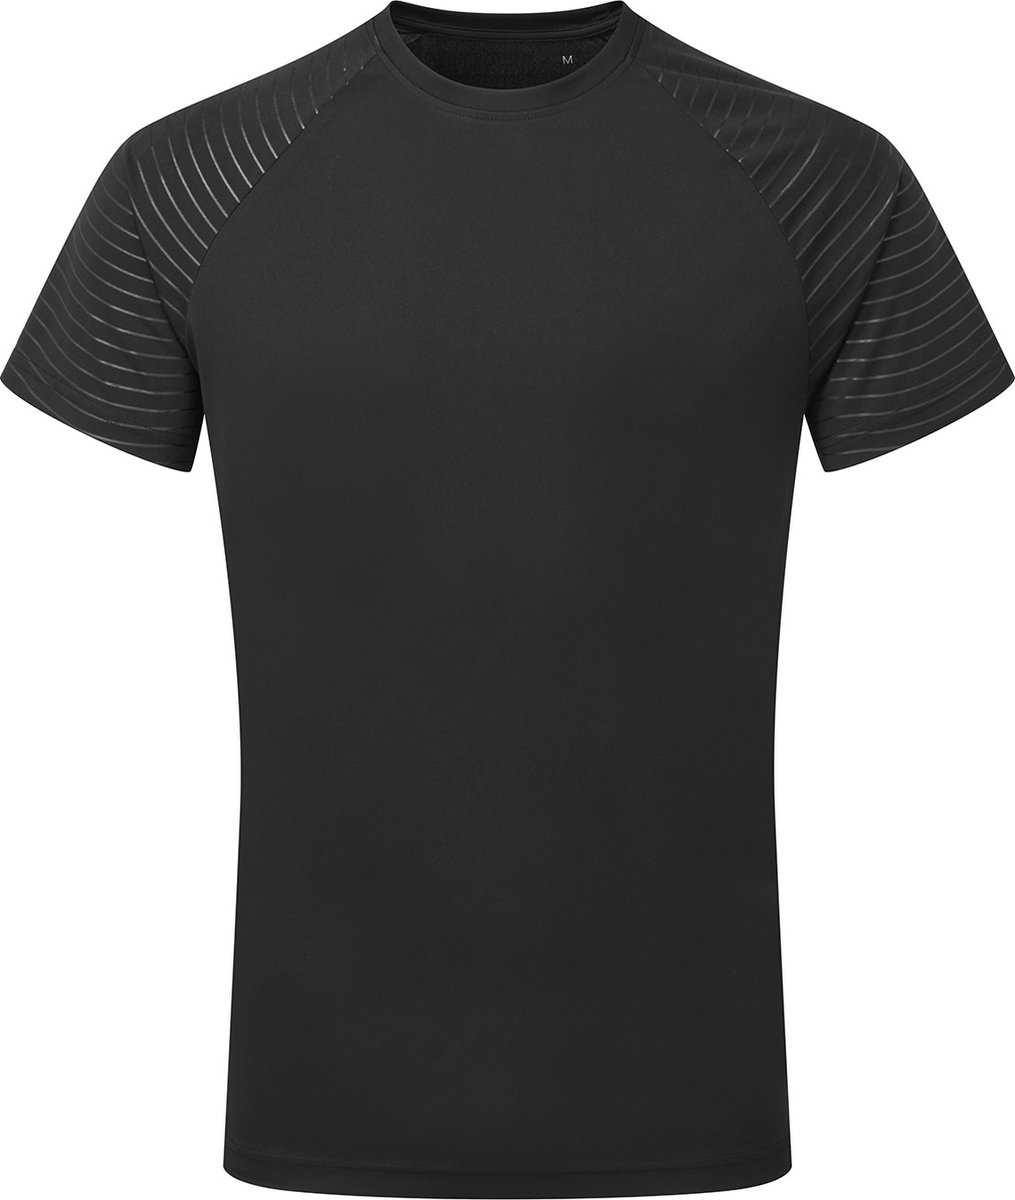 Fitness t-shirt heren - Sport t-shirt heren - sportkleding heren - Allround sport shirt - fitness kleding heren - Merkloos